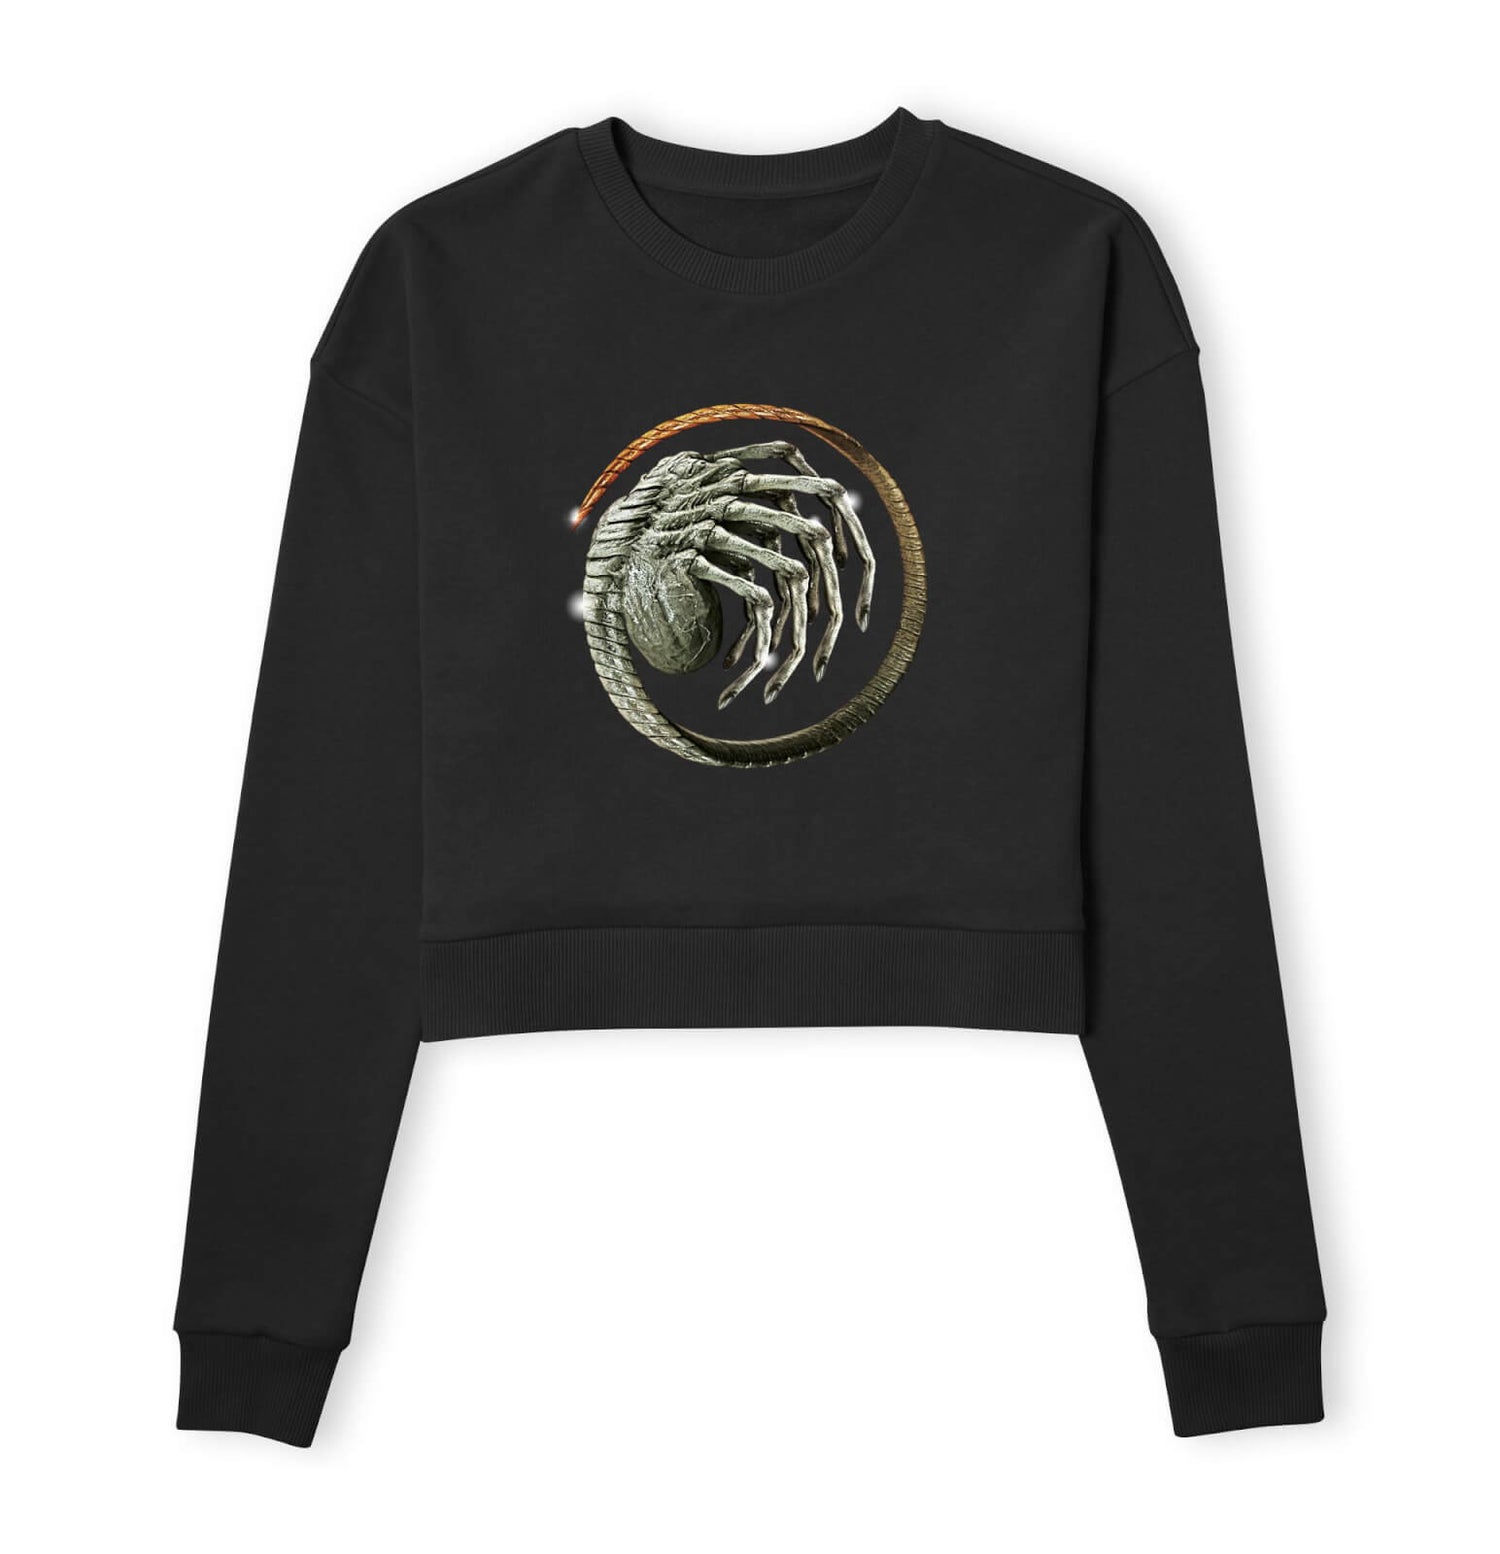 Alien Facehugger Curled Women's Cropped Sweatshirt - Black